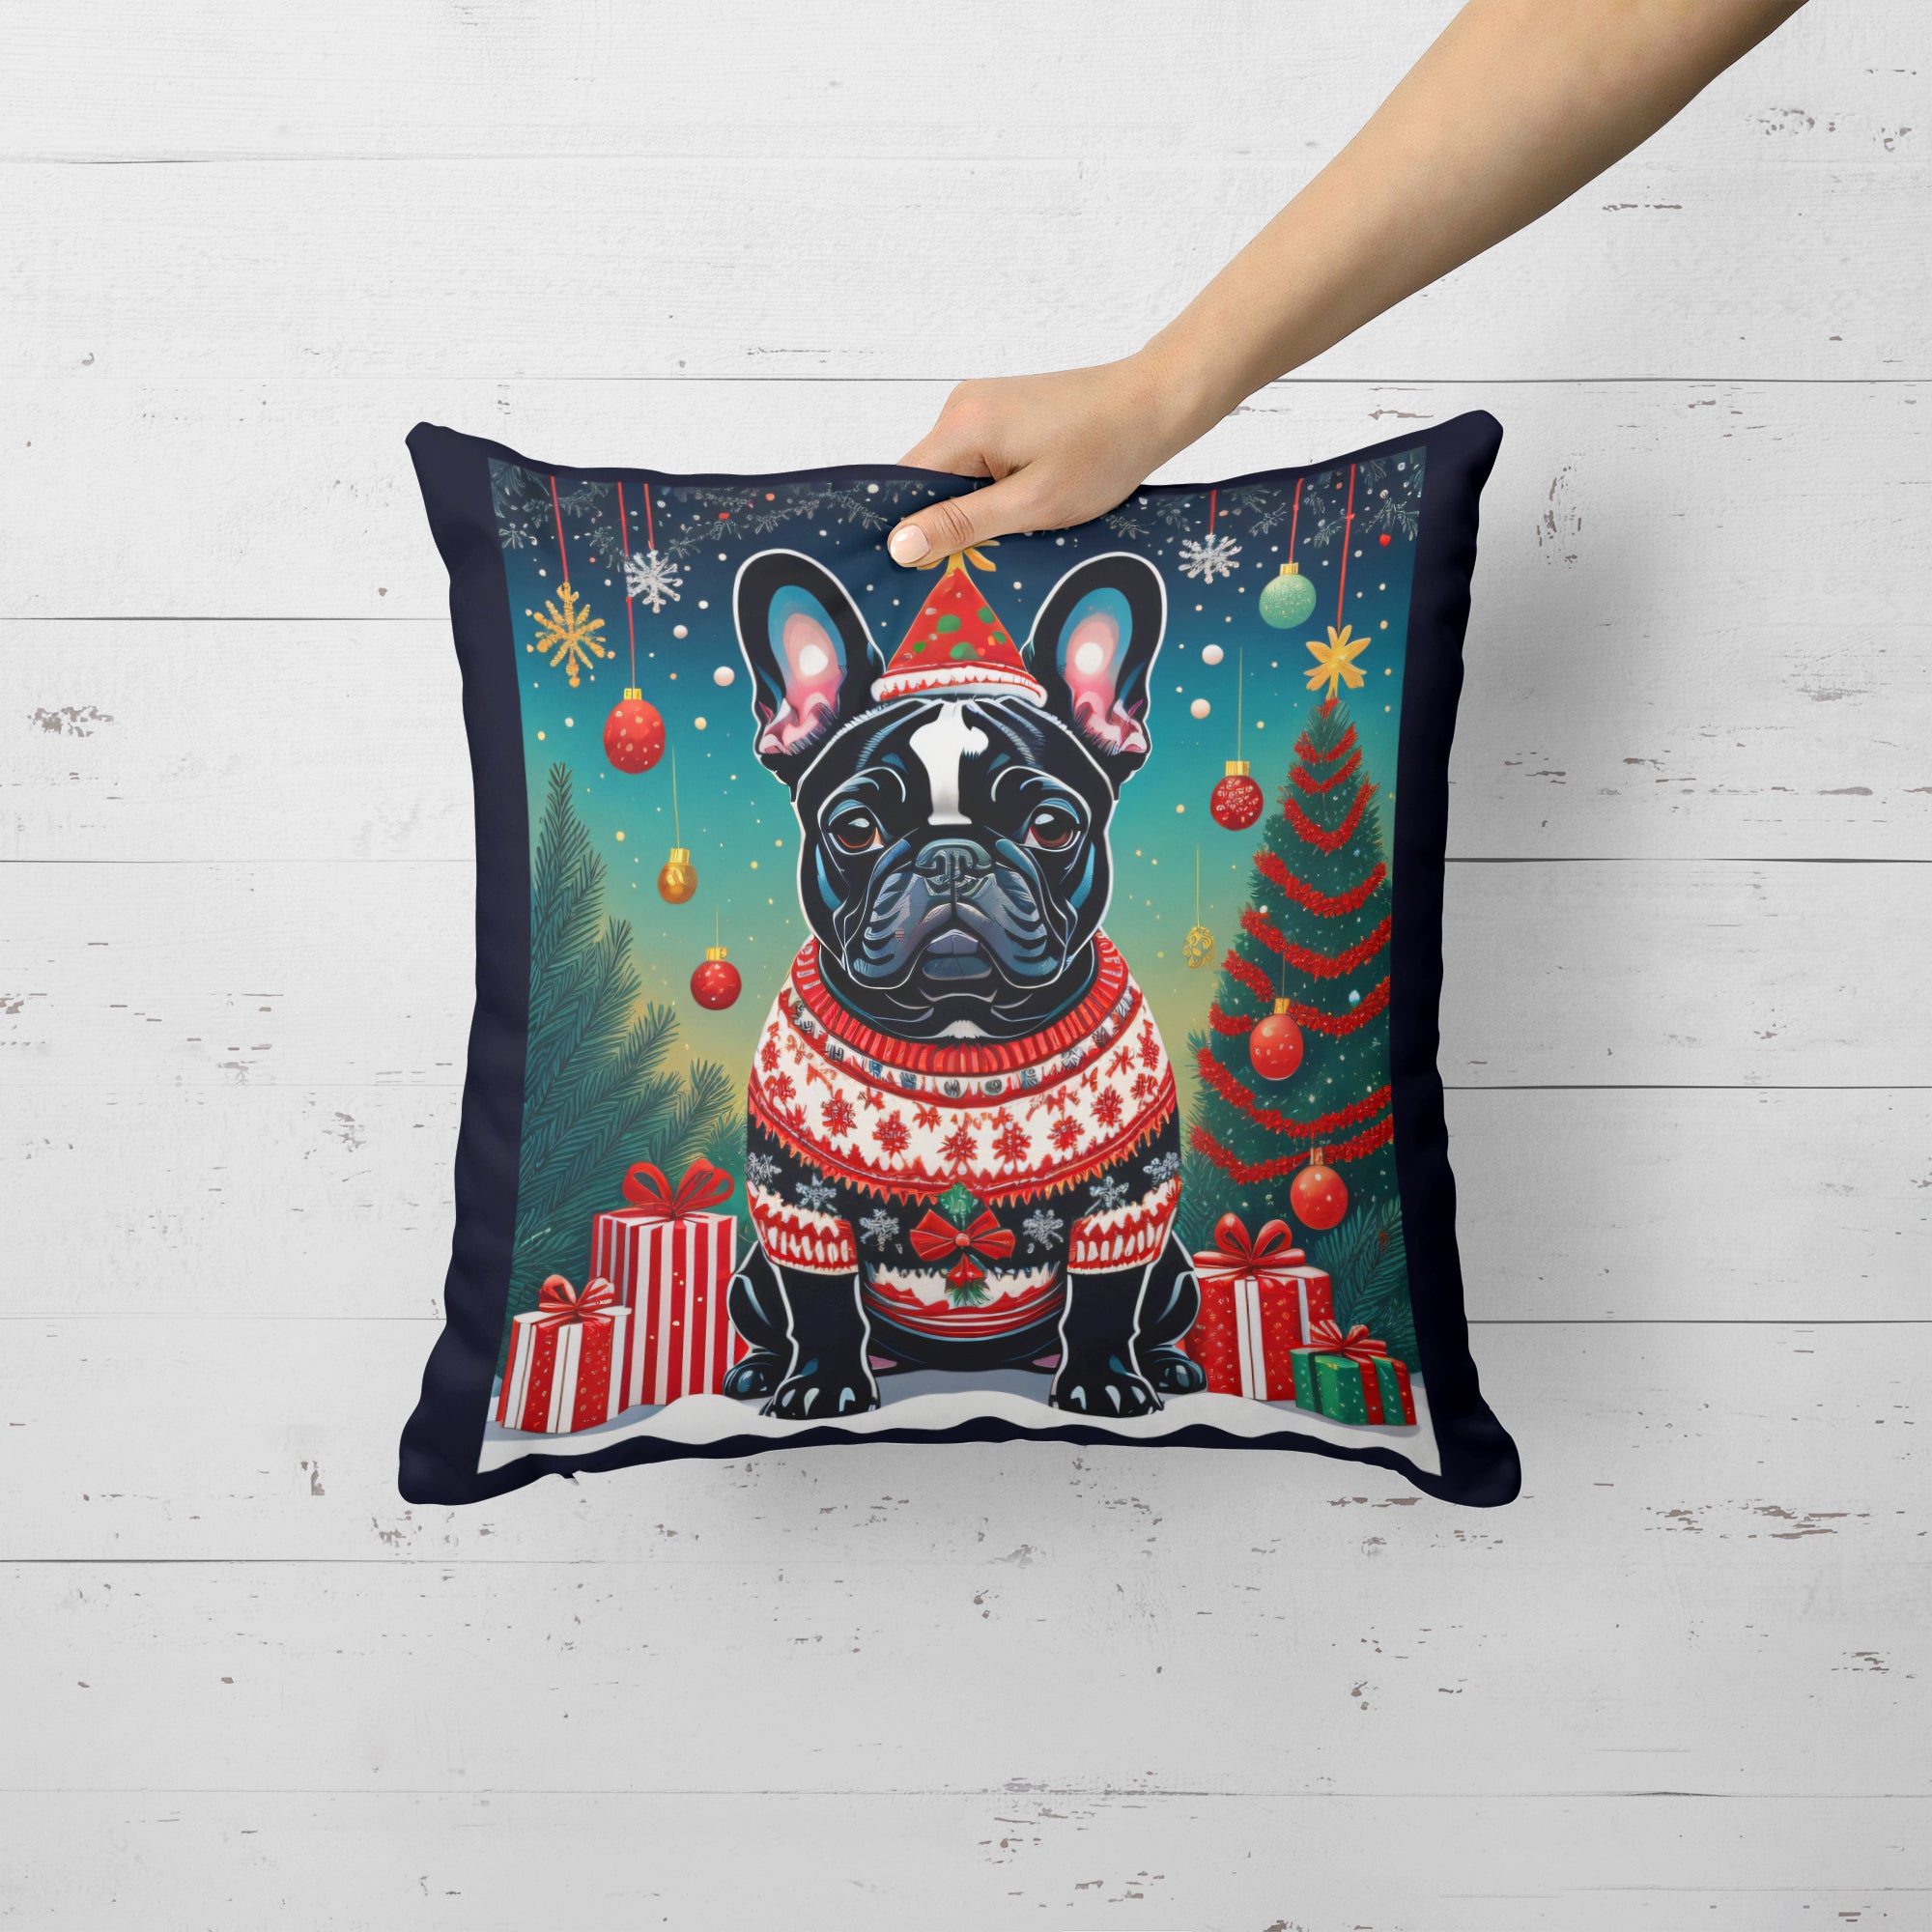 Buy this Black French Bulldog Christmas Fabric Decorative Pillow